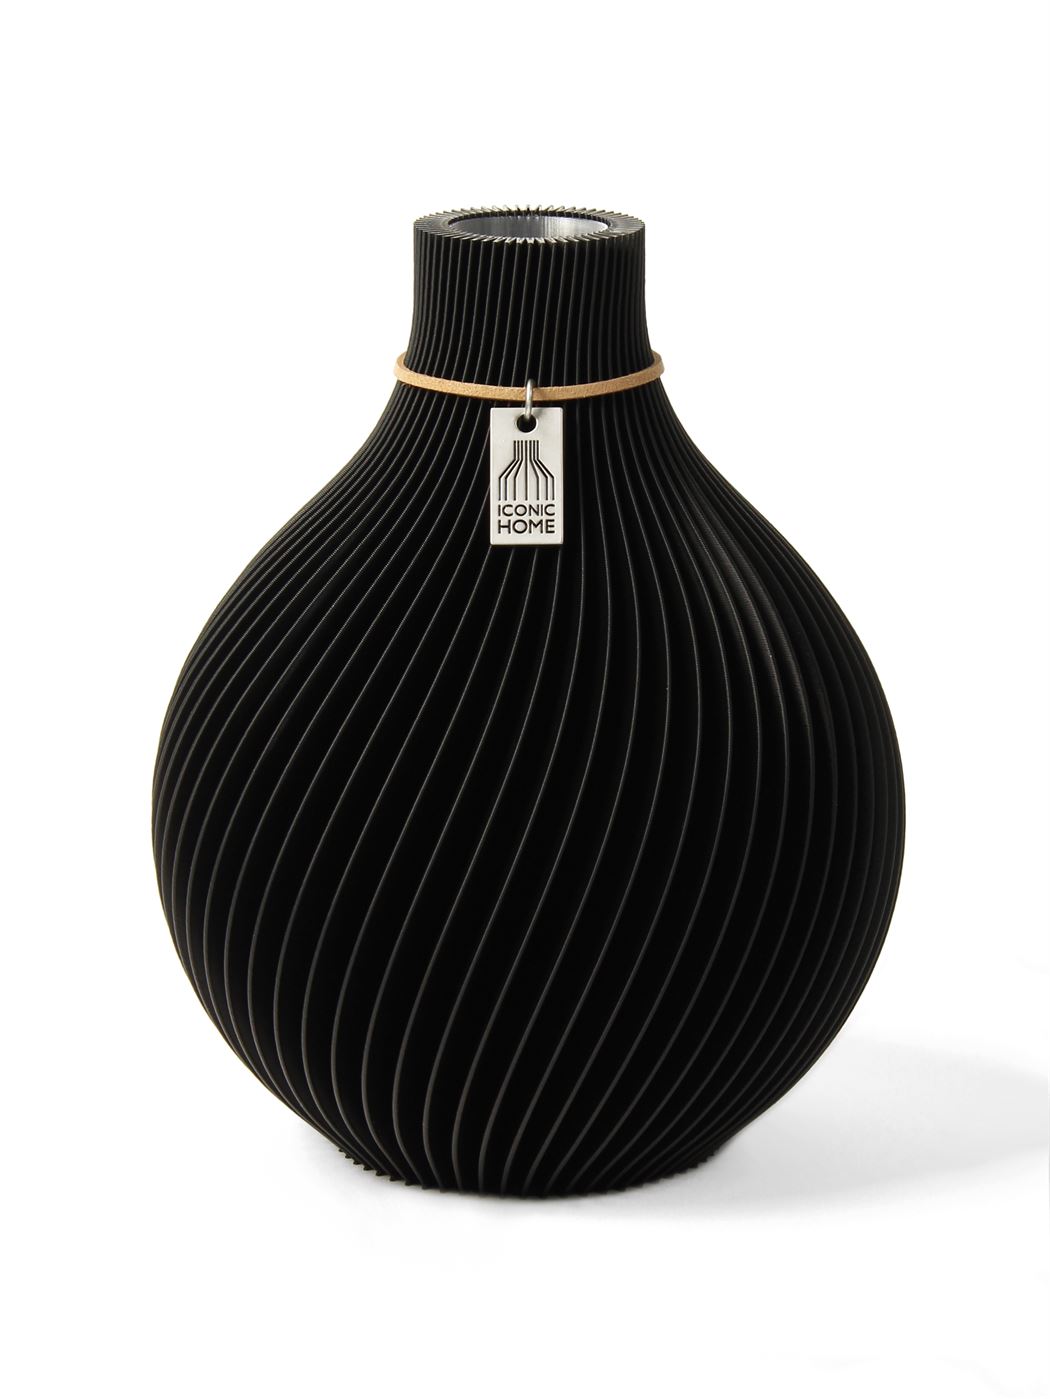 Vase Sphere schwarz Deep Black Small ICONIC HOME